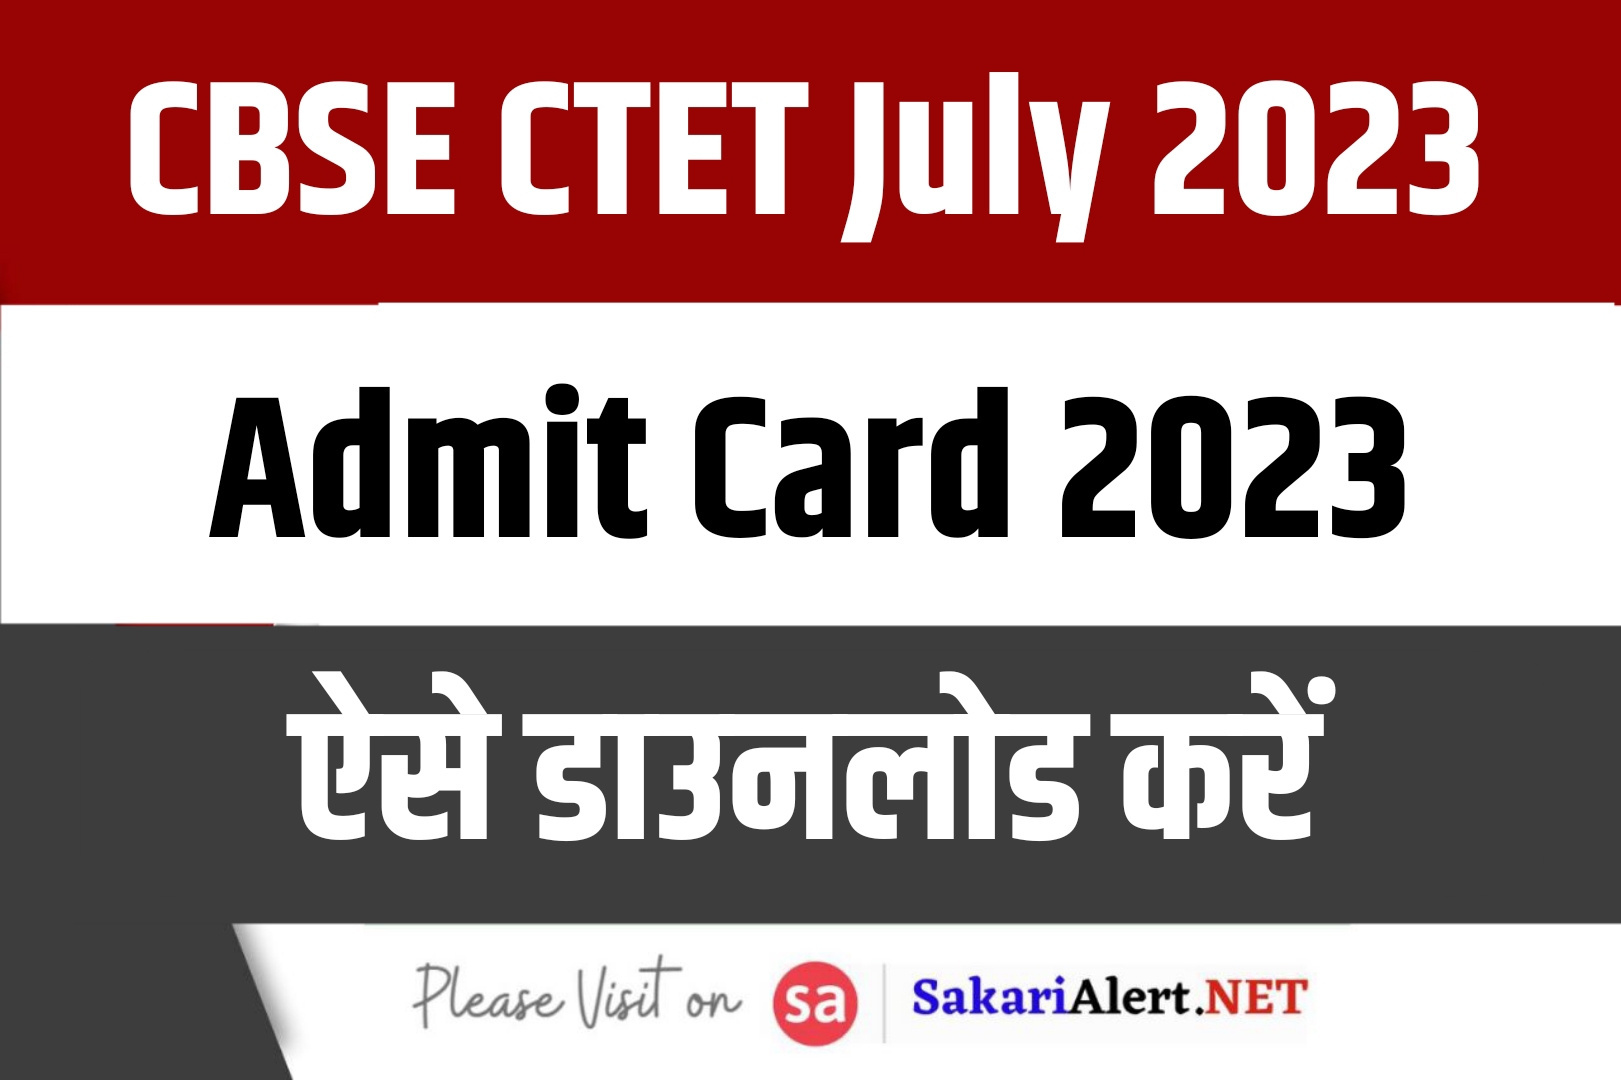 CBSE CTET July 2023 Admit Card